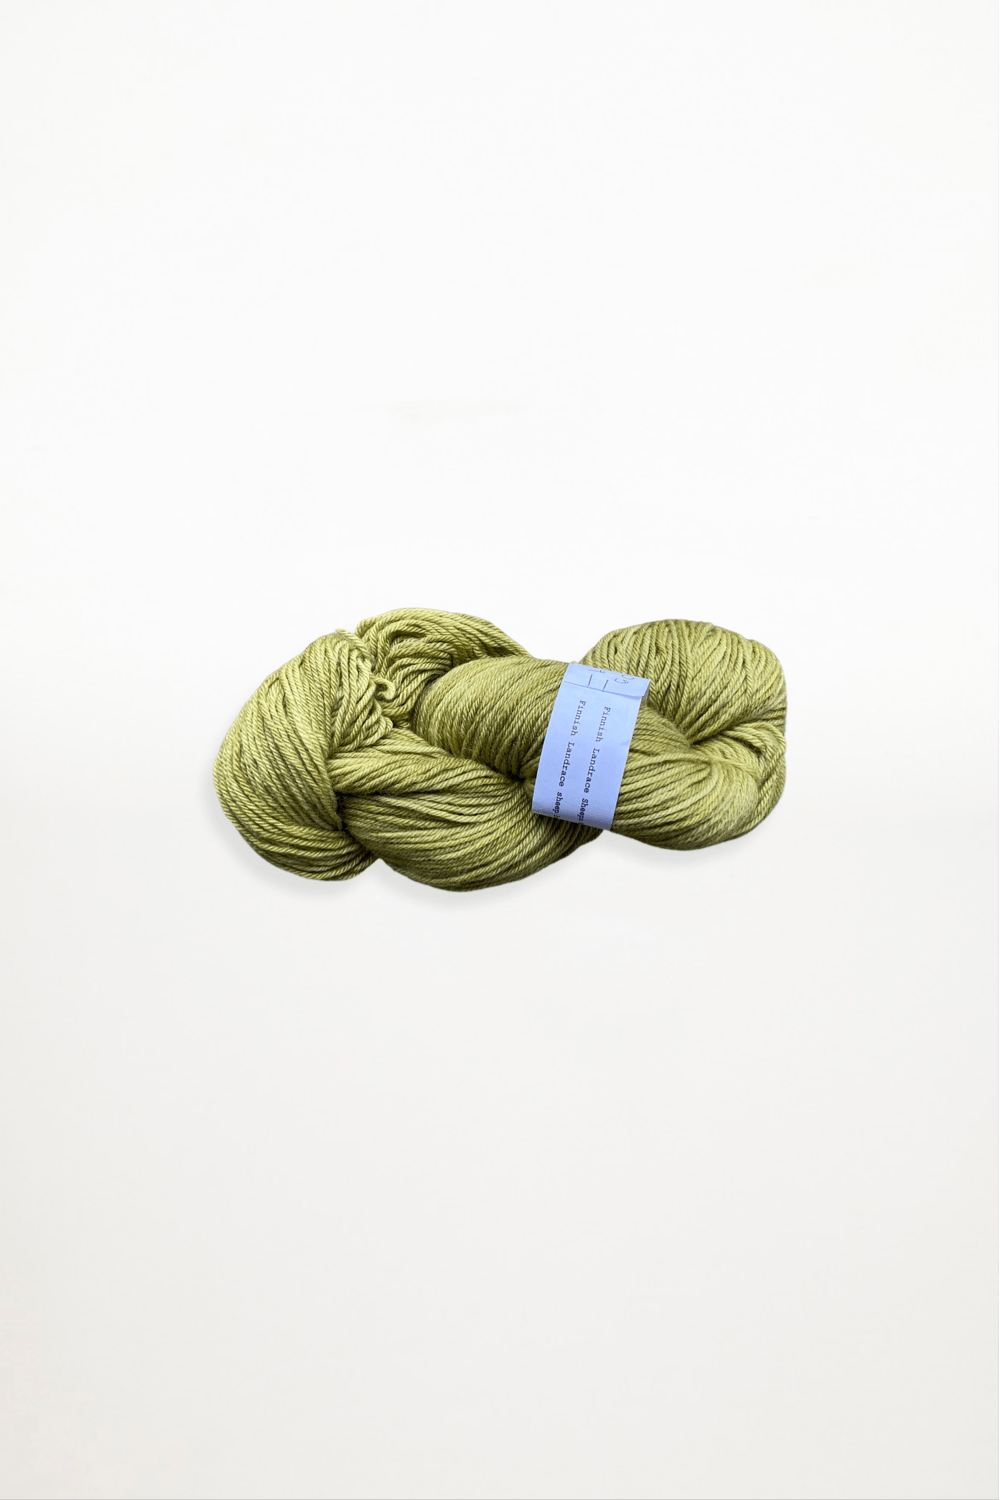 Fin Sheep - Hand Dyed Fin Yarn - 8 ply - Ensemble Studios